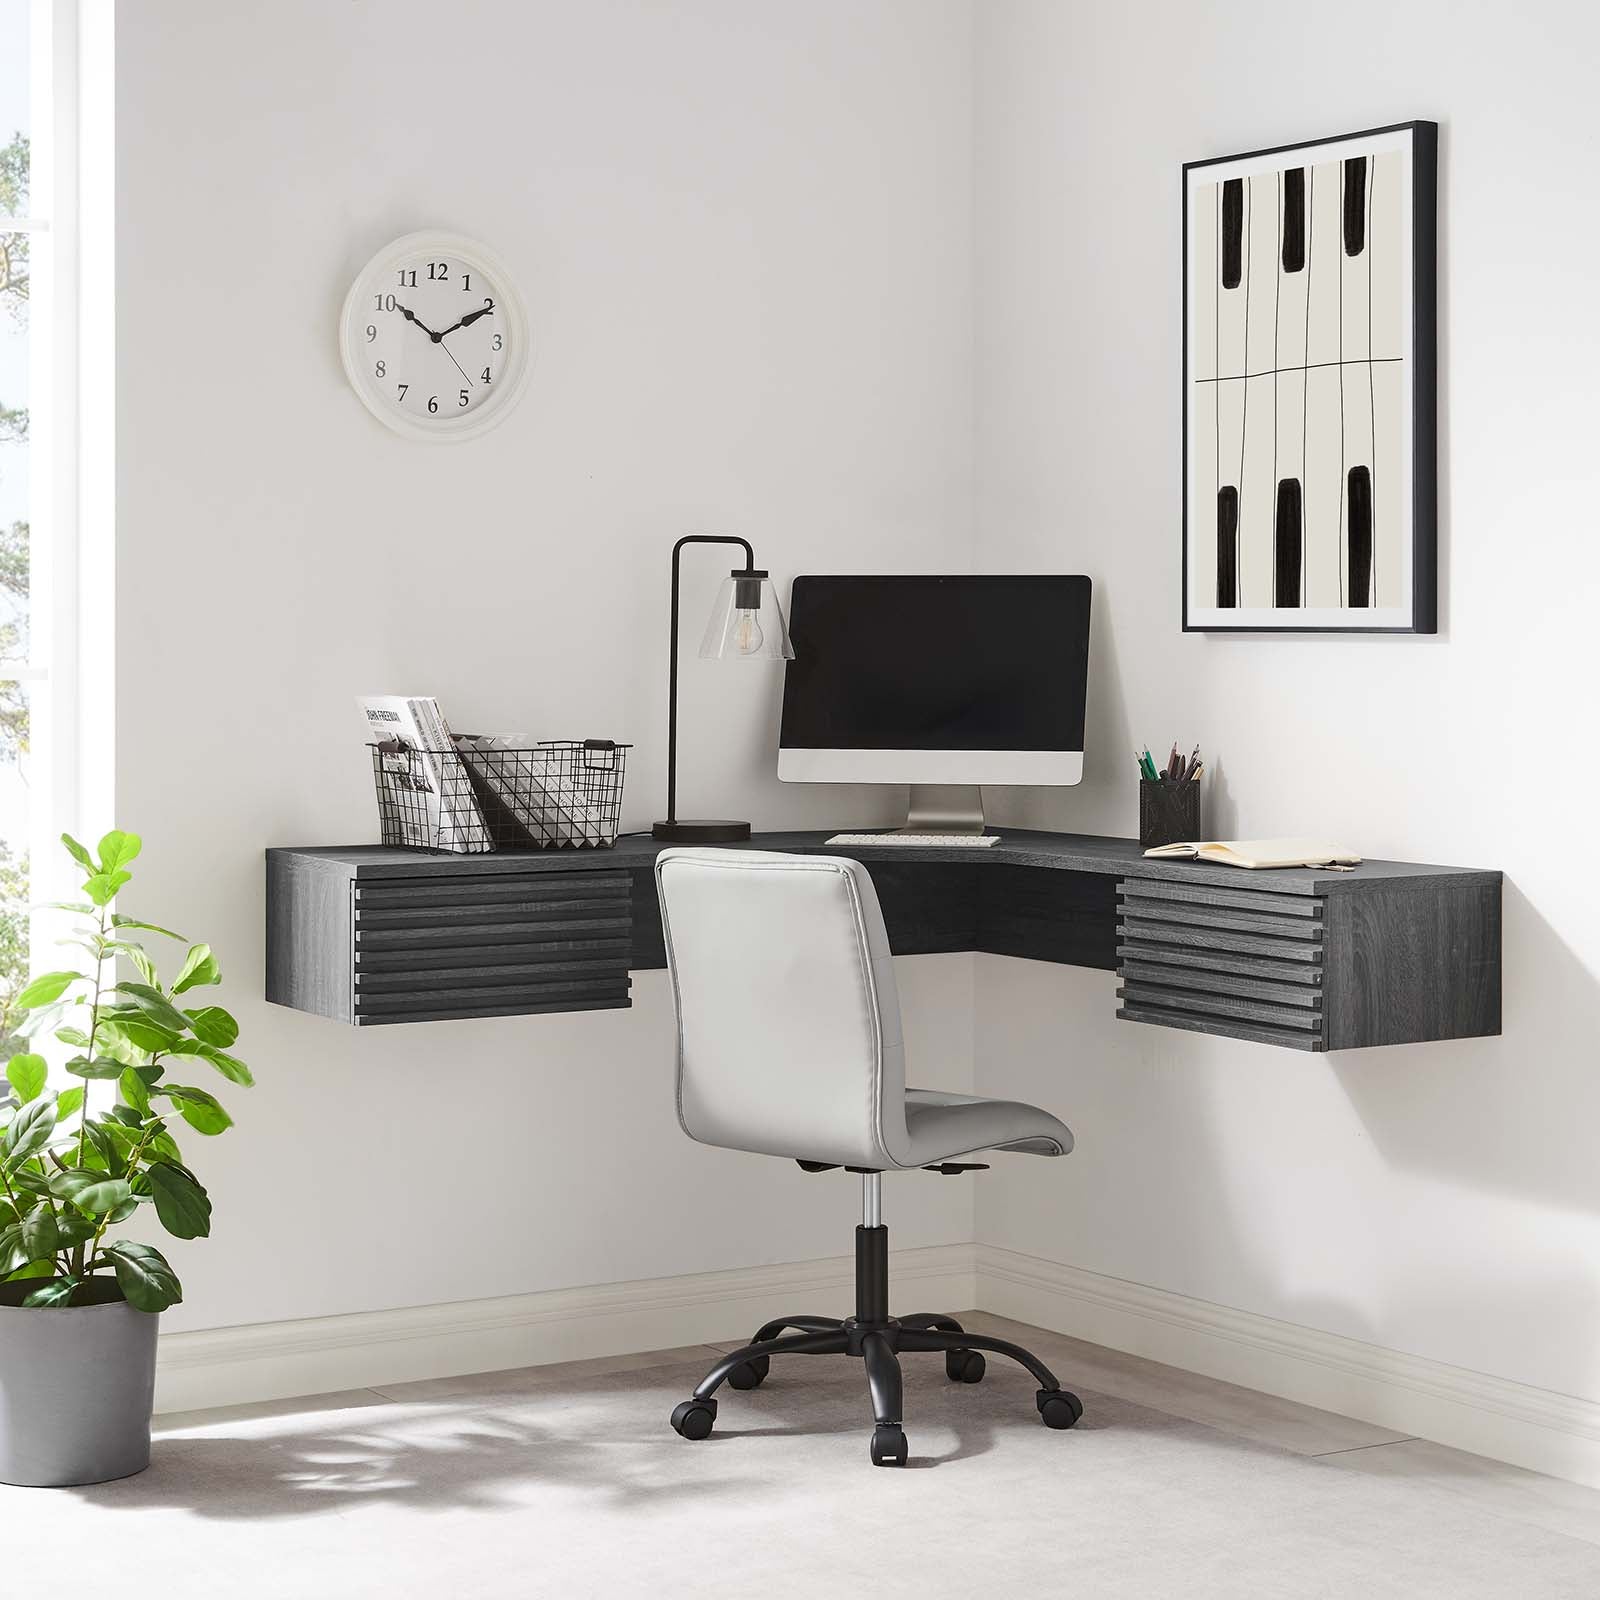 Render Wall Mount Corner Office Desk - East Shore Modern Home Furnishings